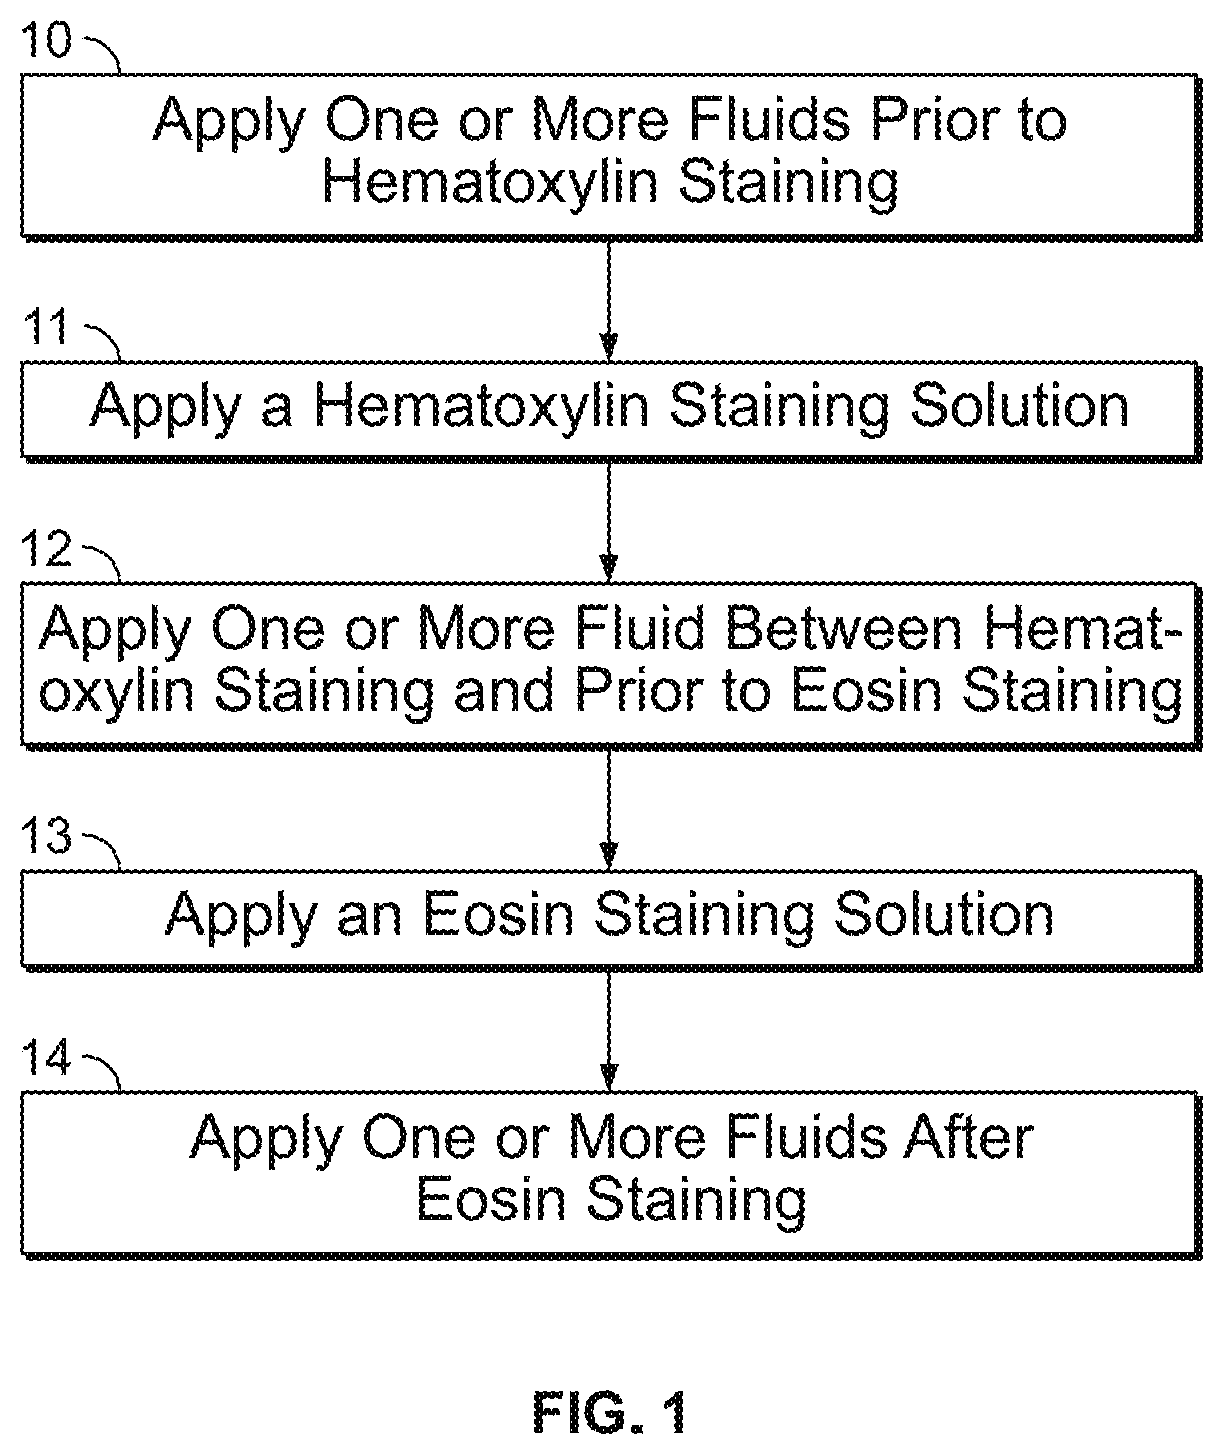 Eosin staining techniques